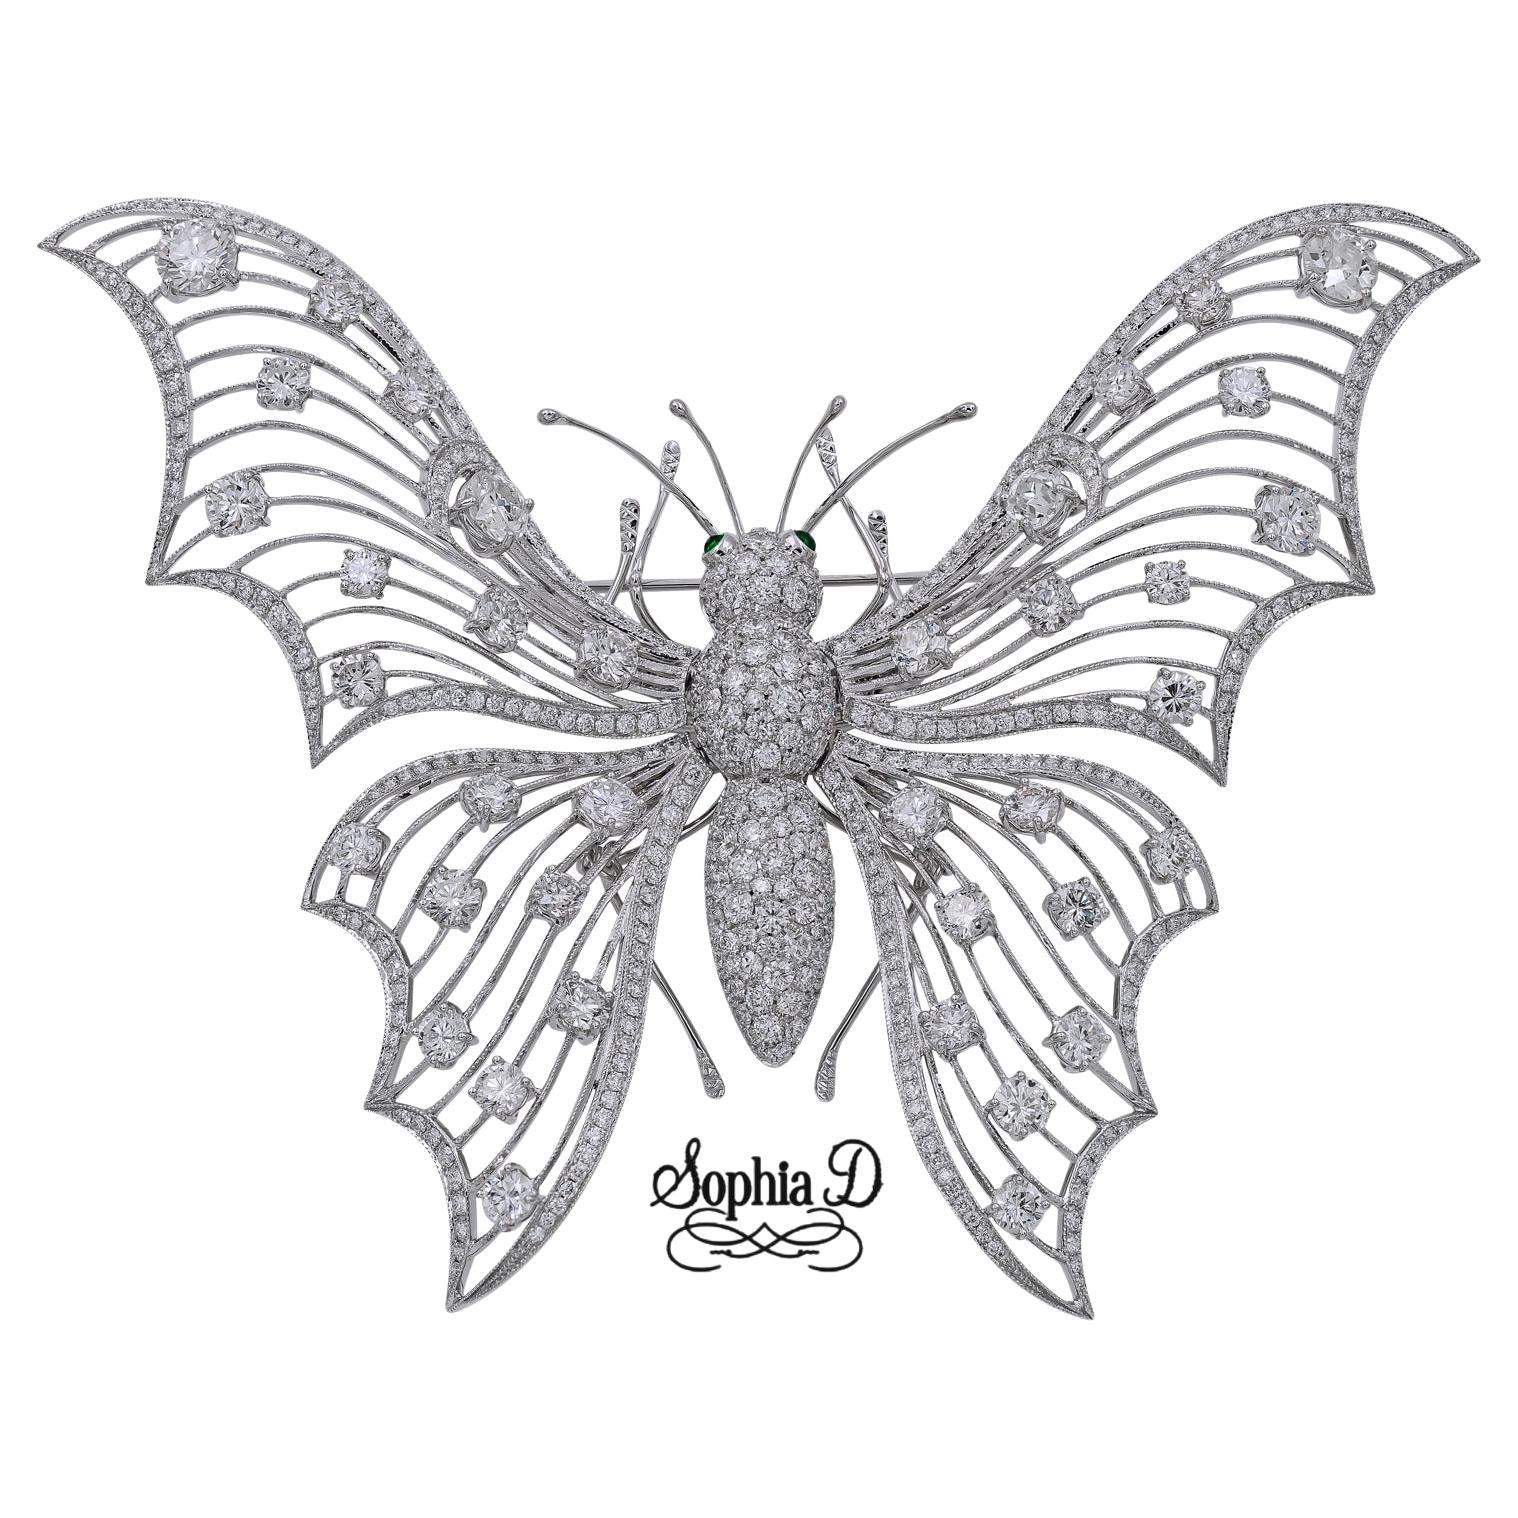 Sophia D, 12.83 Carat Diamond Butterfly Platinum Brooch, with movement